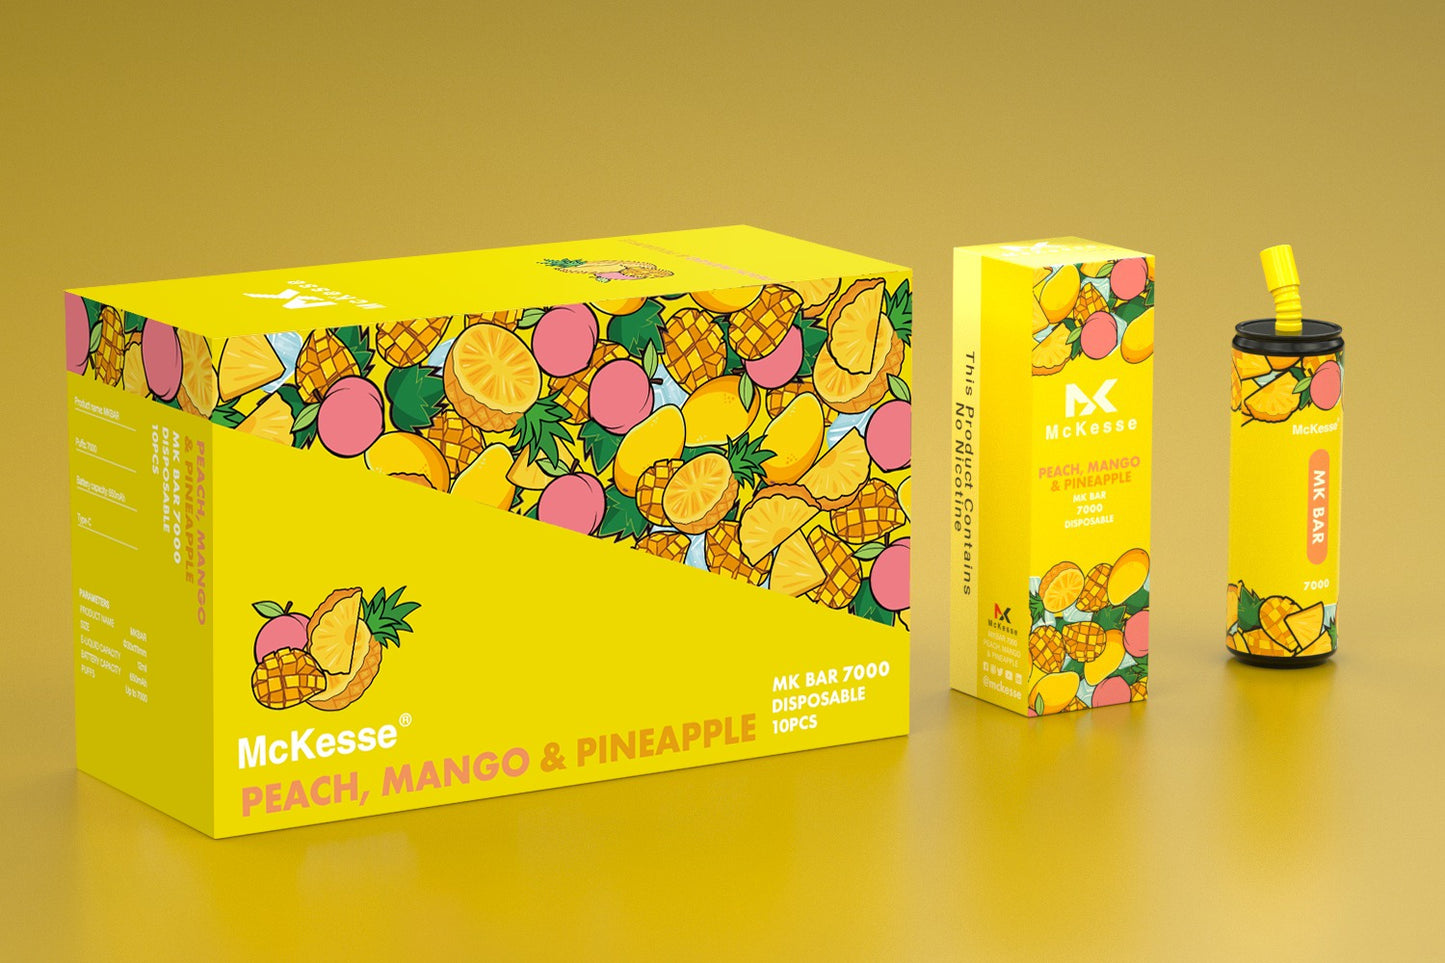 MK Peach Mango Pineapple 7000